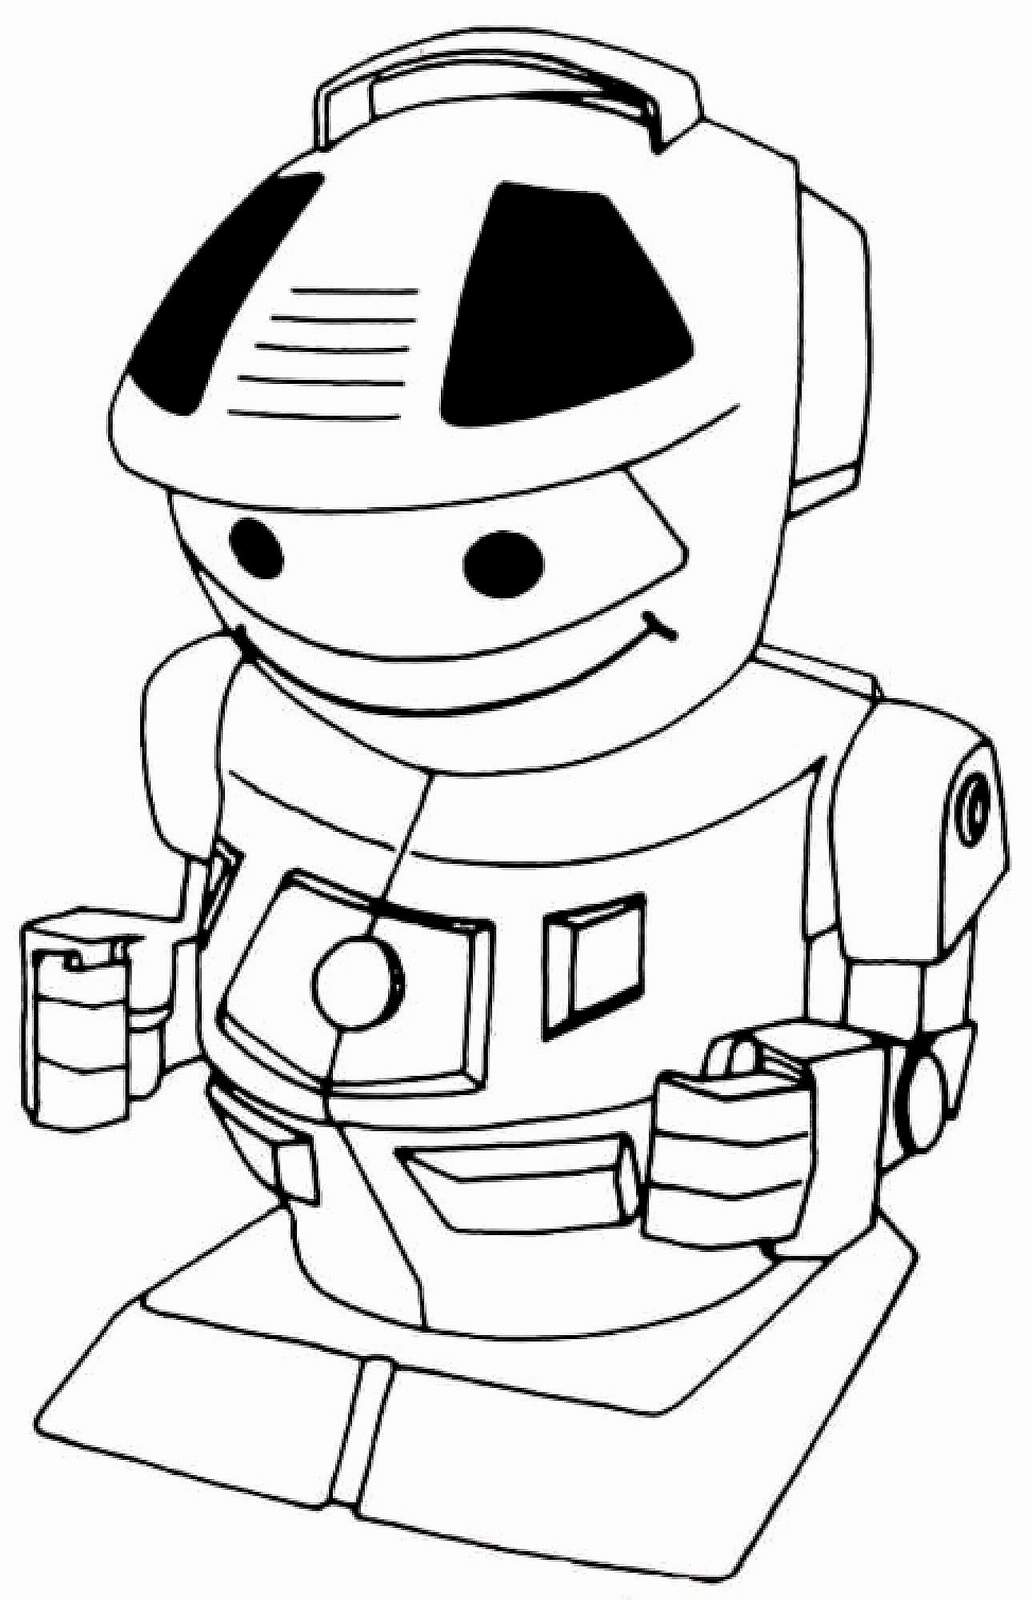 Robot Drawings - theoldrobot.net